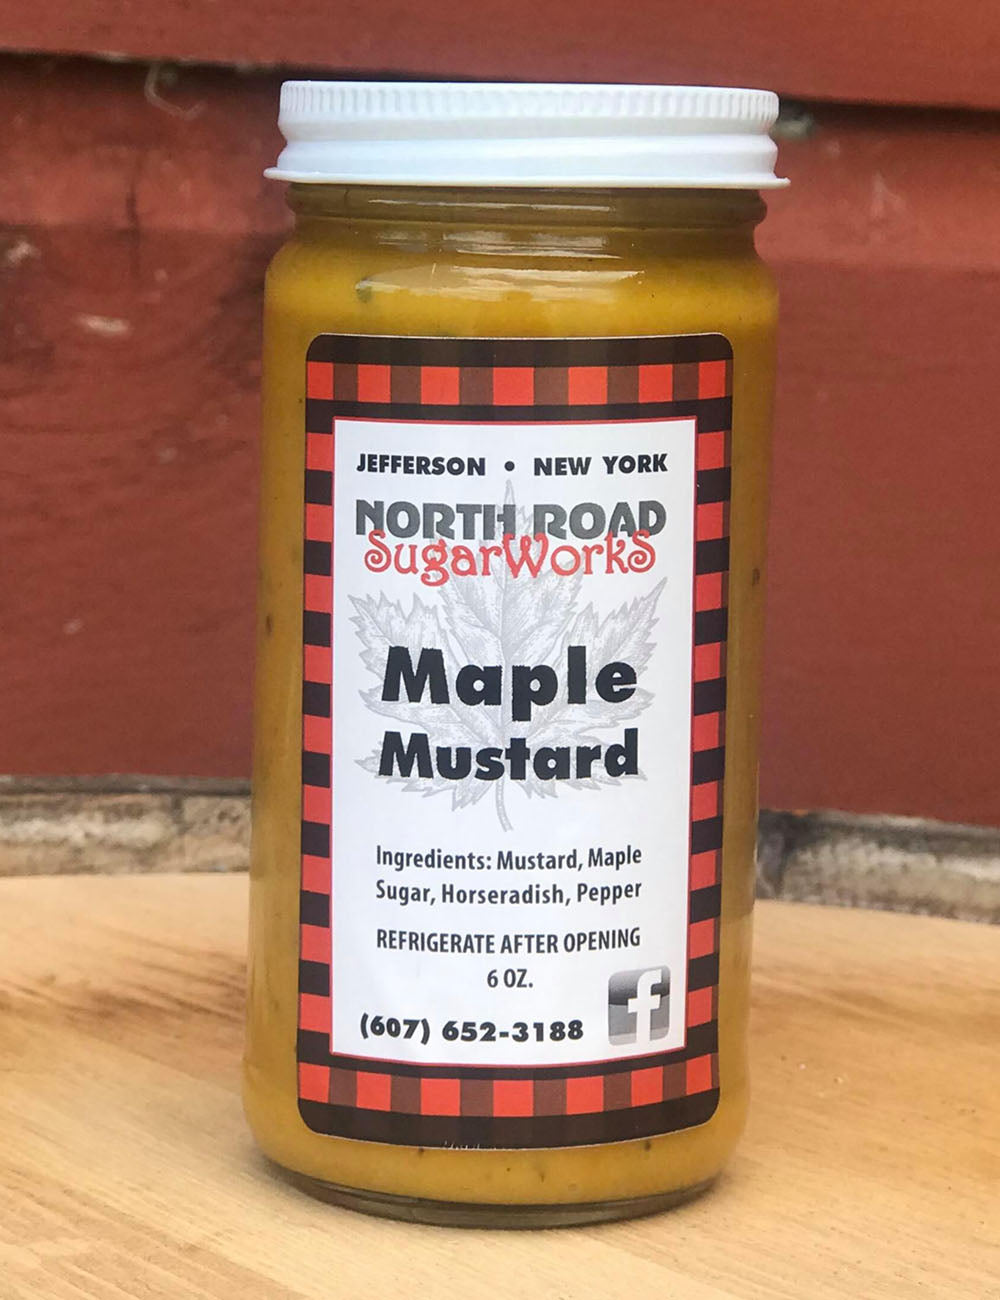 Maple Horseradish Mustard